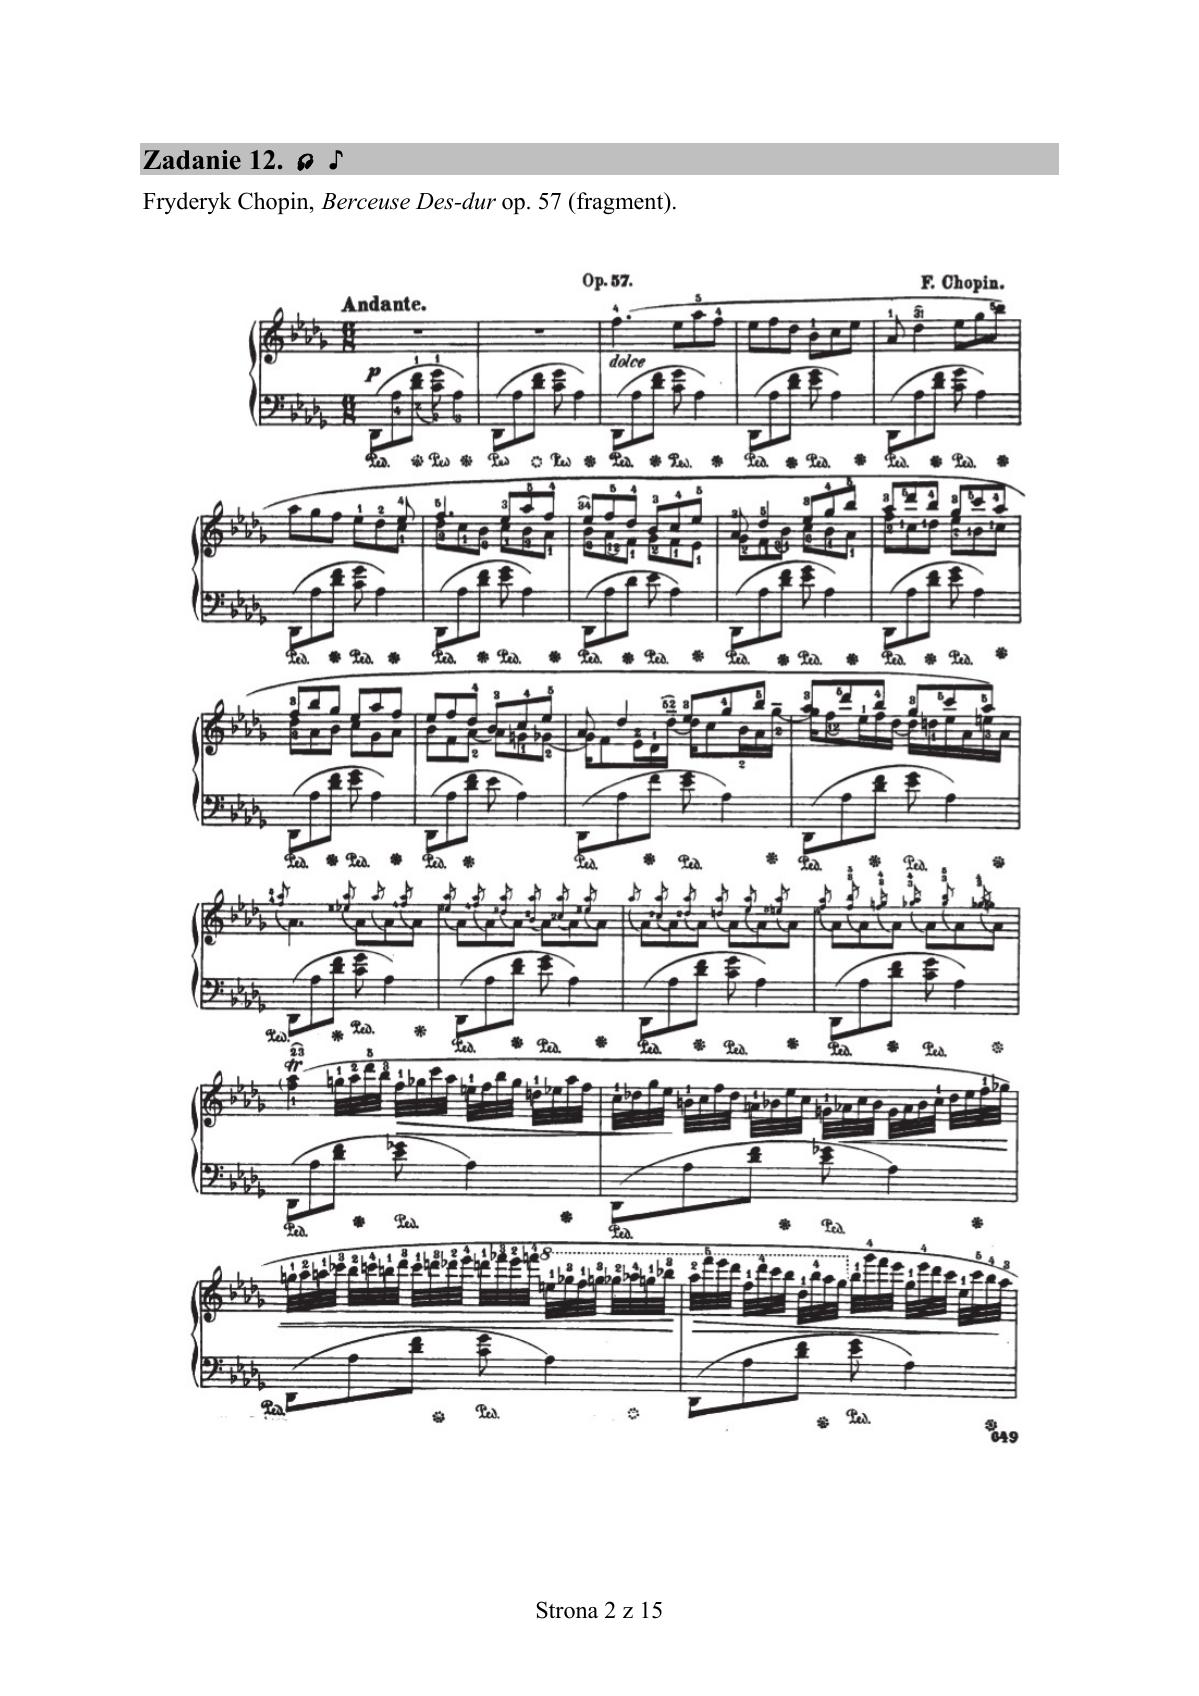 zadanie 12 - Fryderyk Chopin, Berceuse Des-dur op. 57 - fragment-1